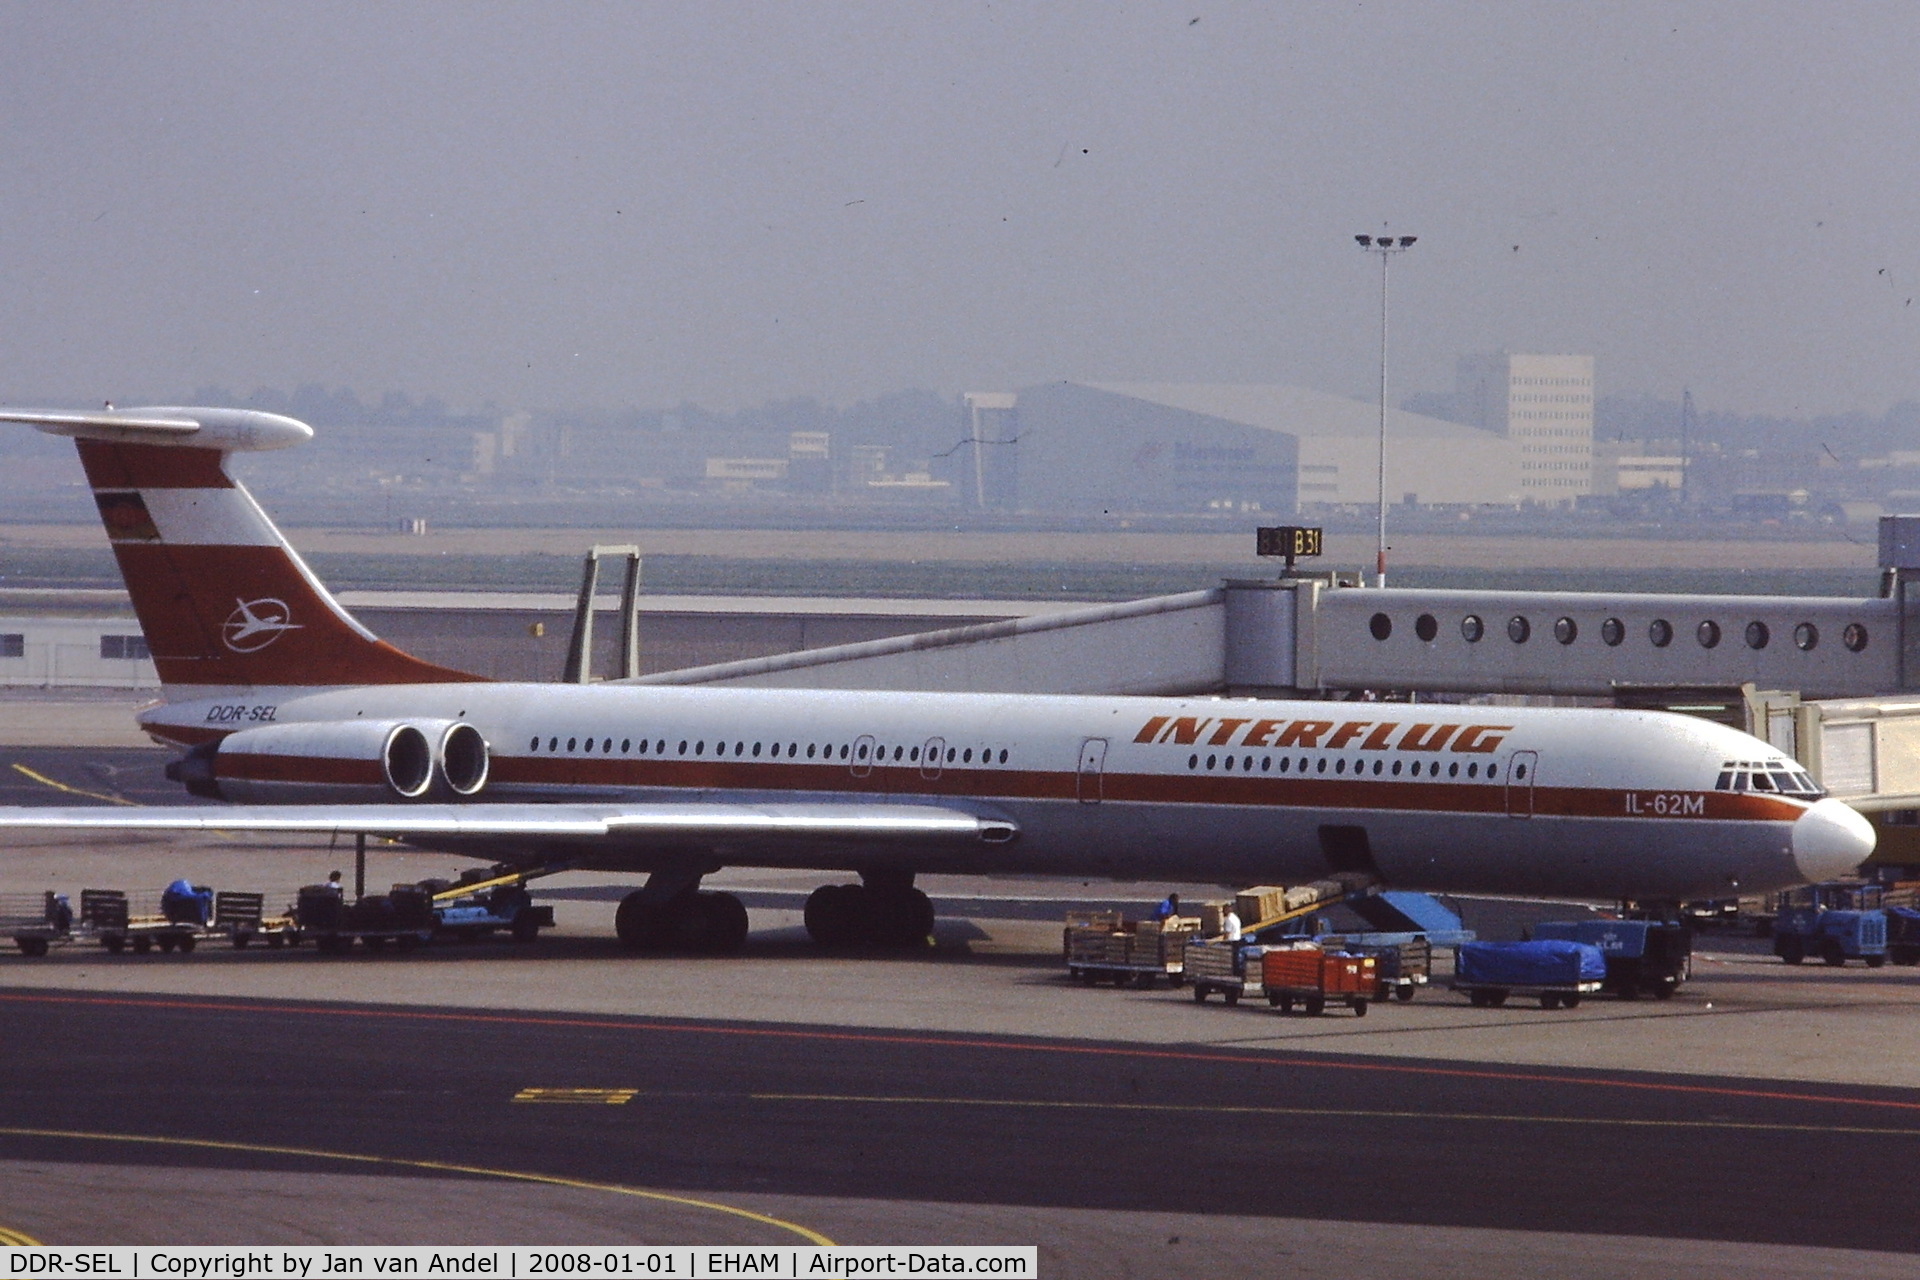 DDR-SEL, 1979 Ilyushin Il-62M C/N 4934734, iL-62M at Schiphol airport Amsterdam, early 1980 's